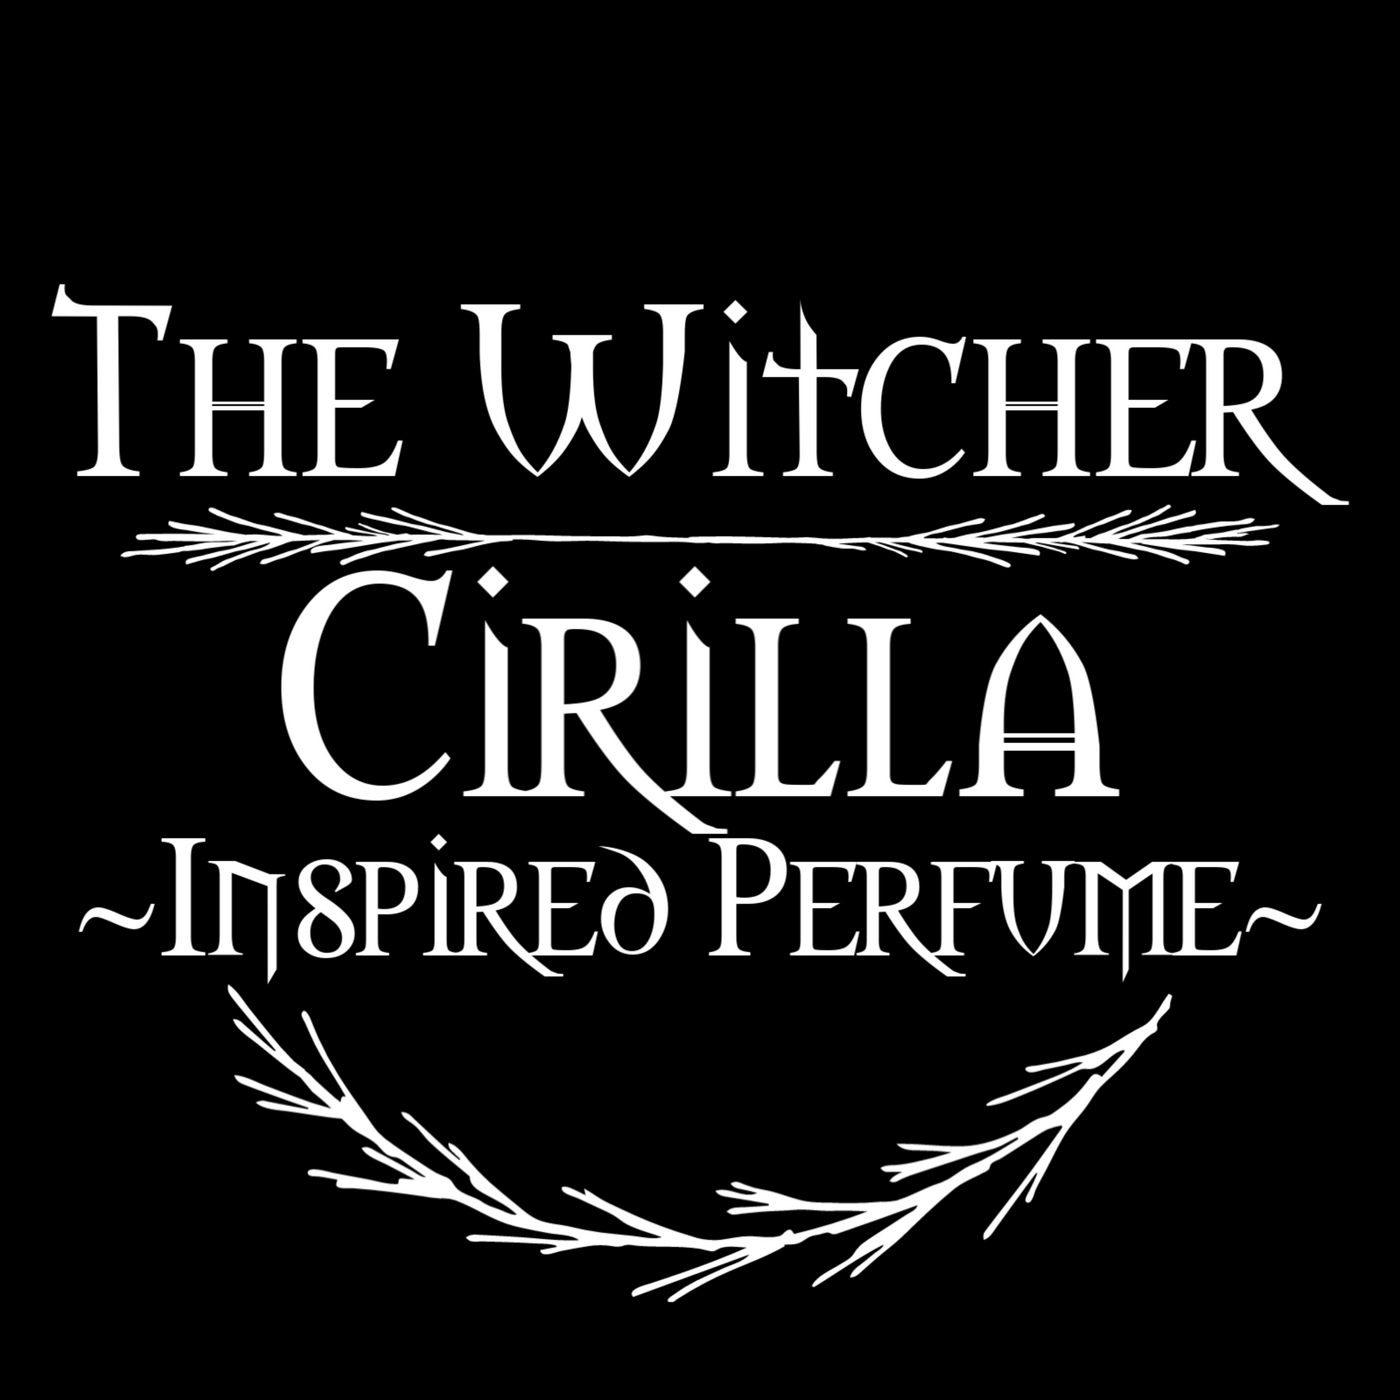 Cirilla inspired perfume (Water lily, Smoky vanilla, Amber, Sandalwood, Dogwood, Ginger blossoms)